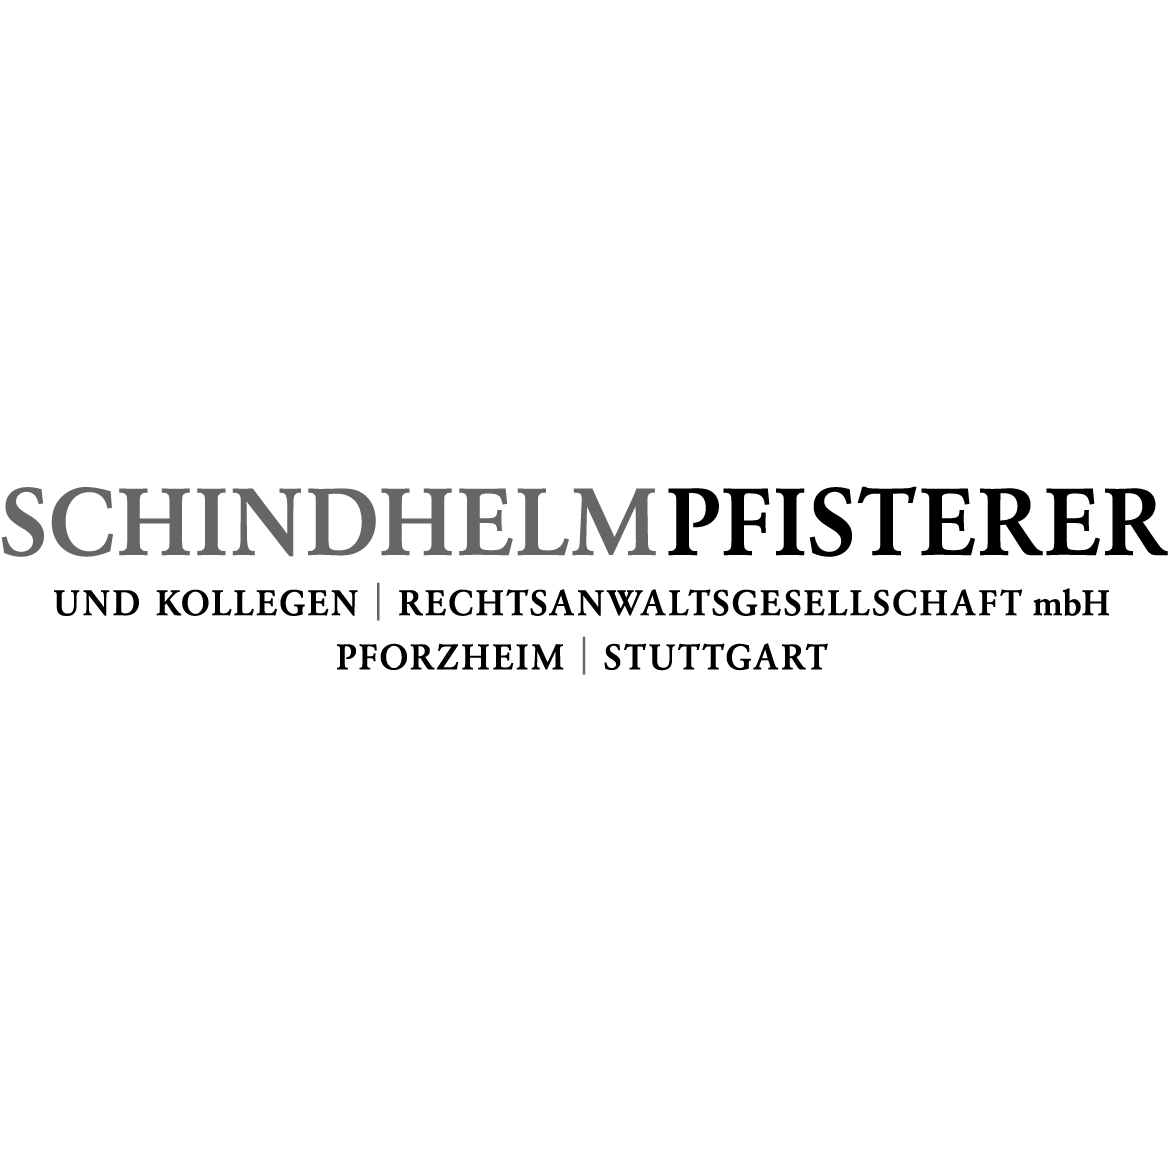 SCHINDHELM PFISTERER UND KOLLEGEN RECHTSANWALTSGESELLSCHAFT mbH in Pforzheim - Logo